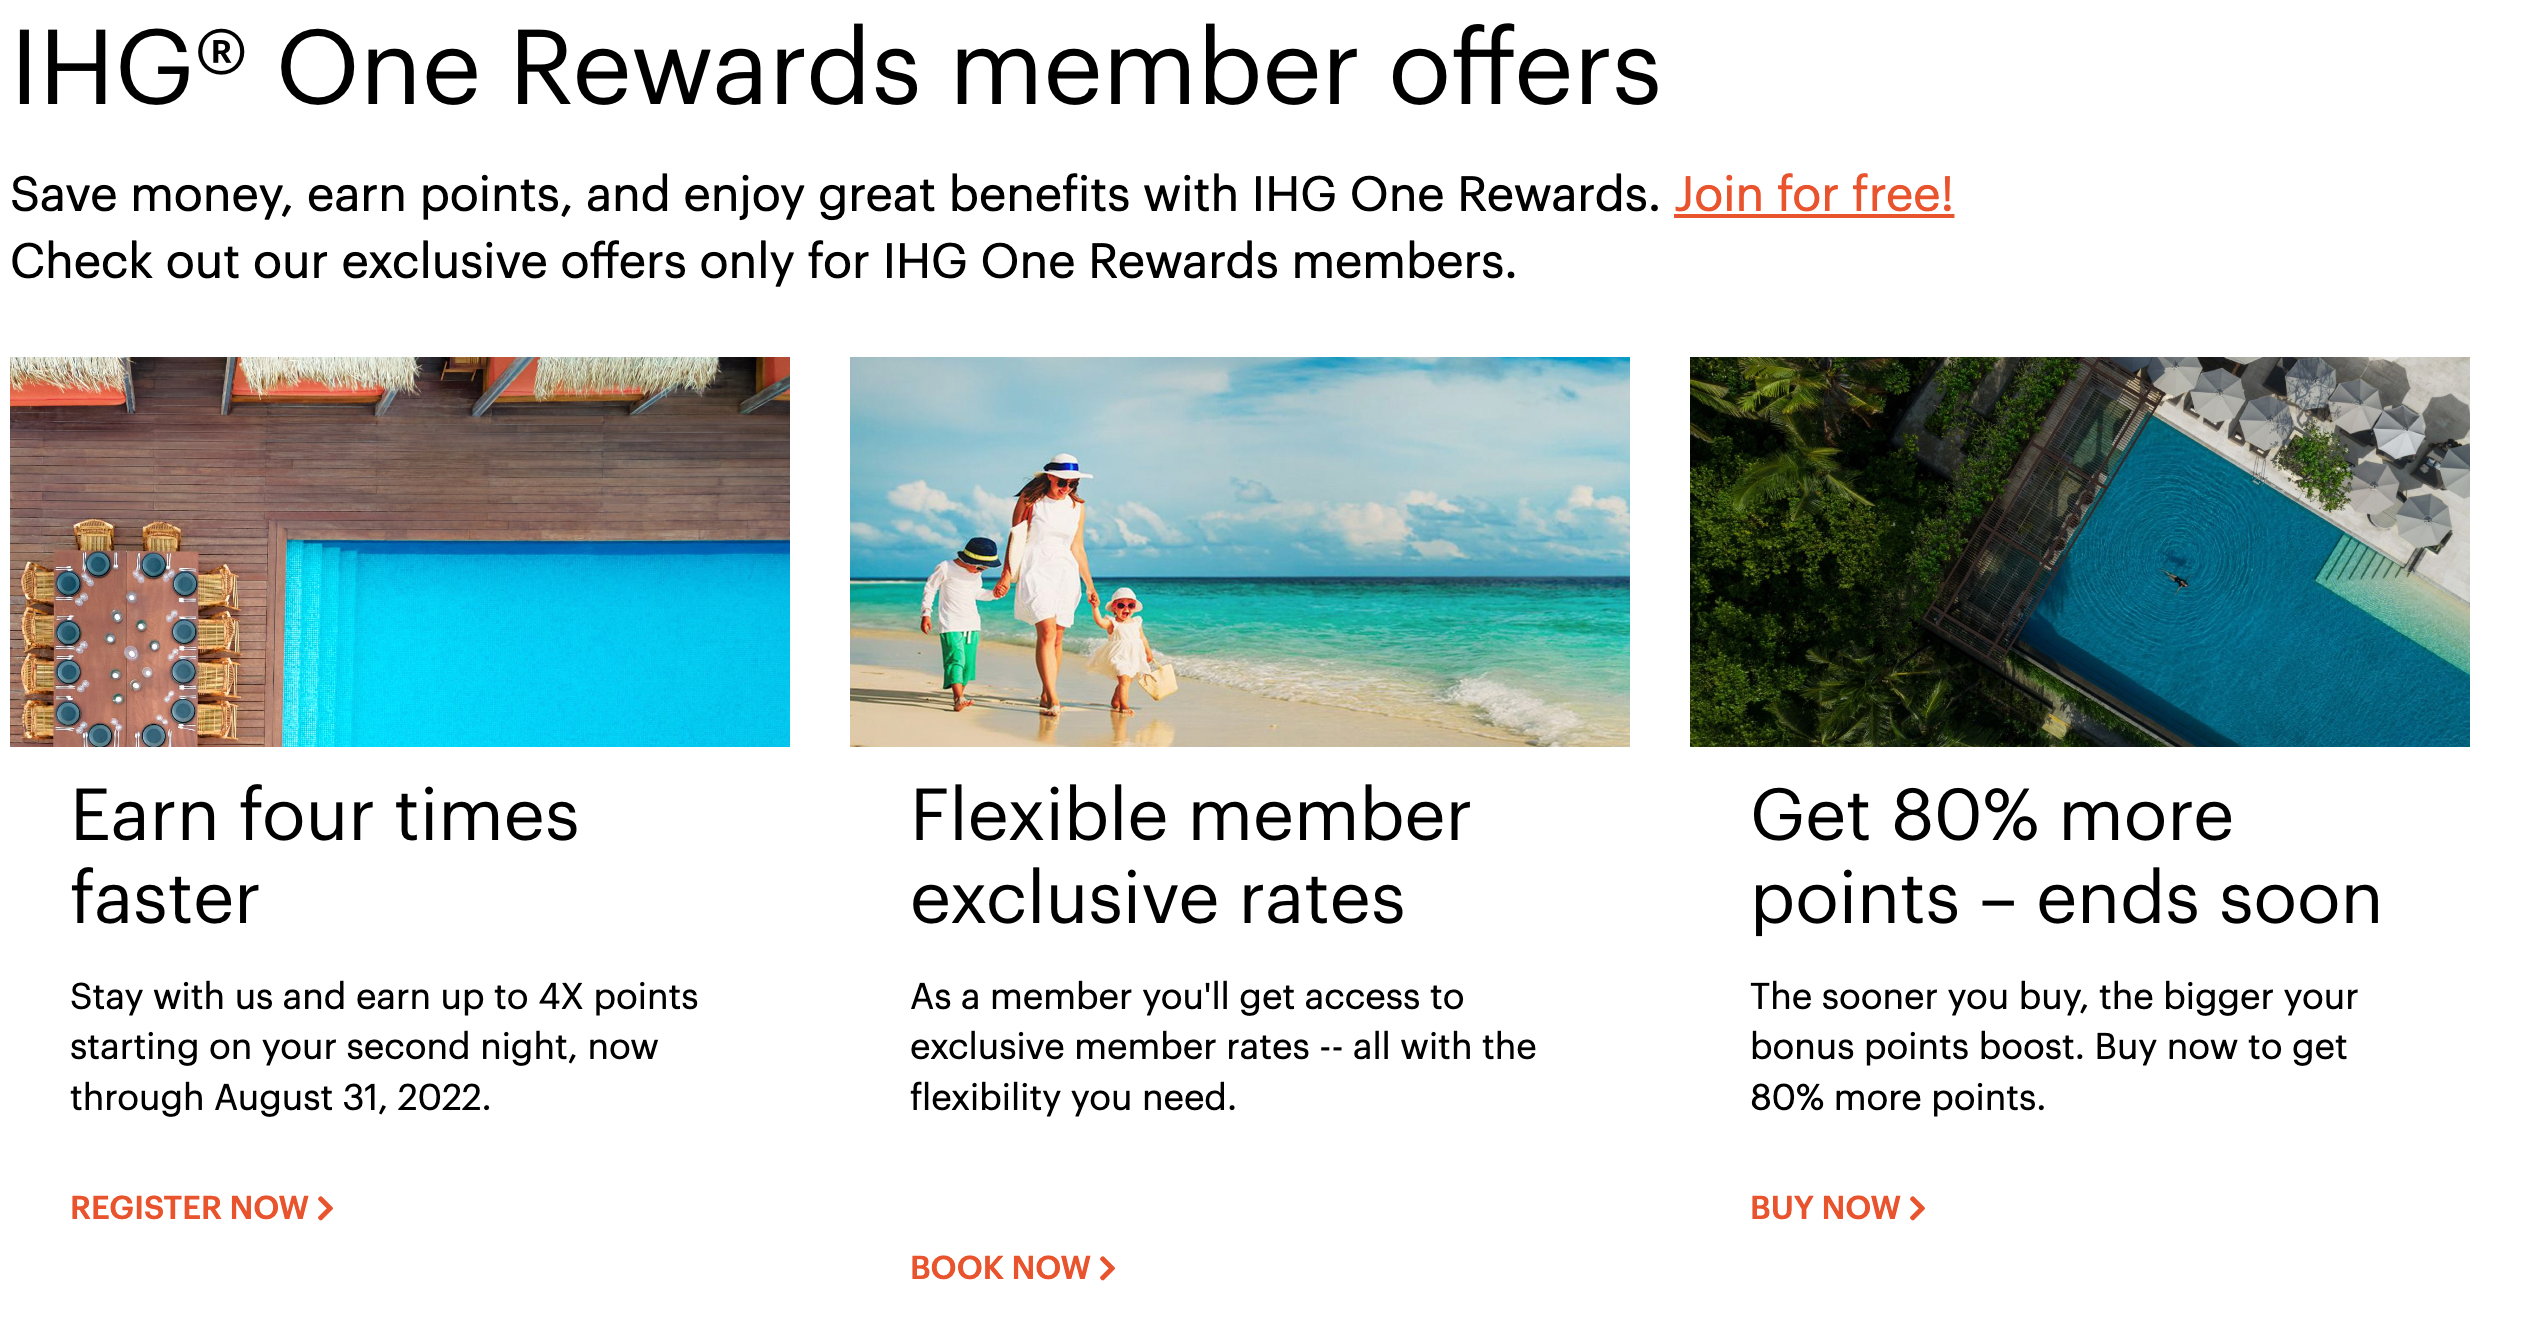 IHG offers a reward member